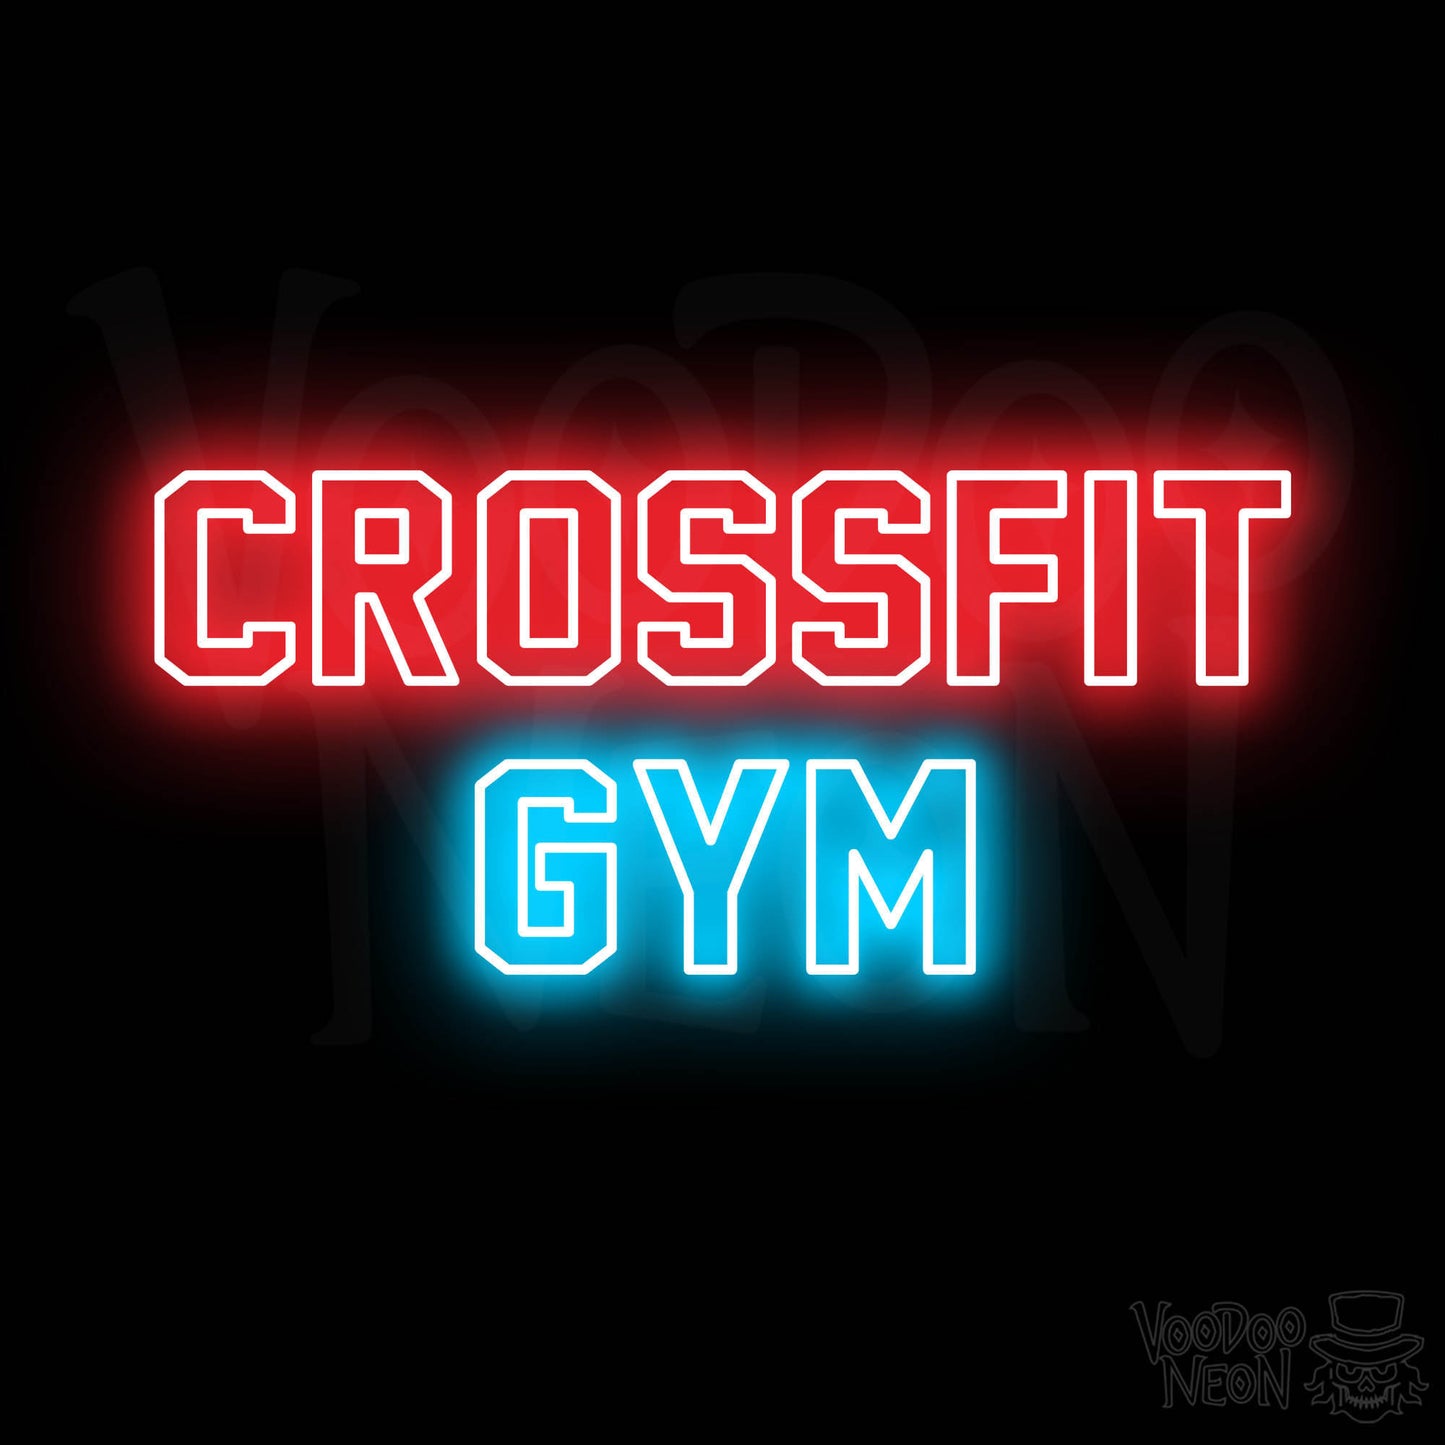 Crossfit Gym LED Neon - Multi-Color